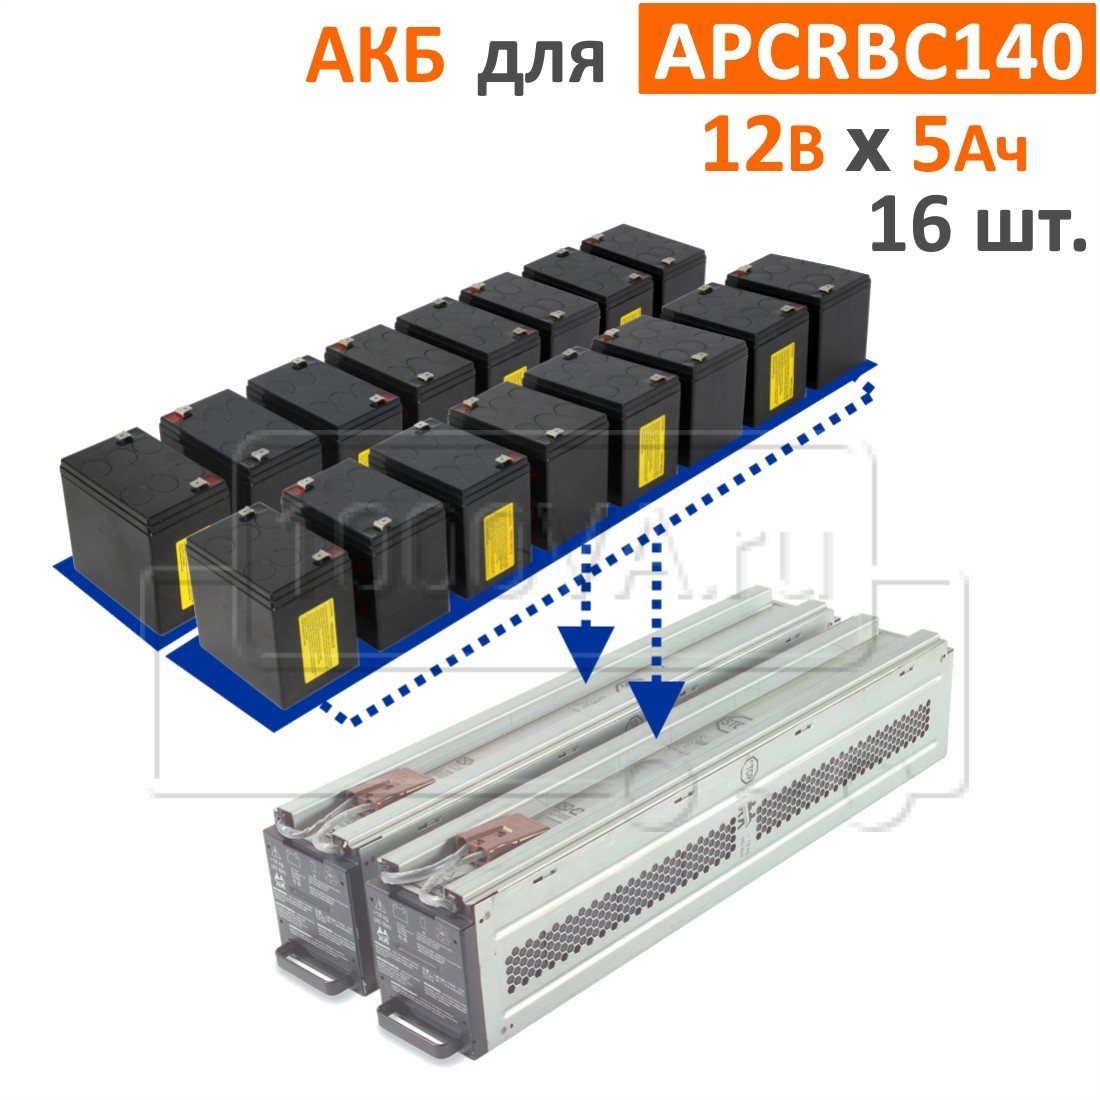 Apcrbc140. Батарея APC apcrbc140. Аккумуляторная батарея APC RBC 140. Комплект батарей APC apcrbc140. Аккумулятор APC, батарея RBC 44.